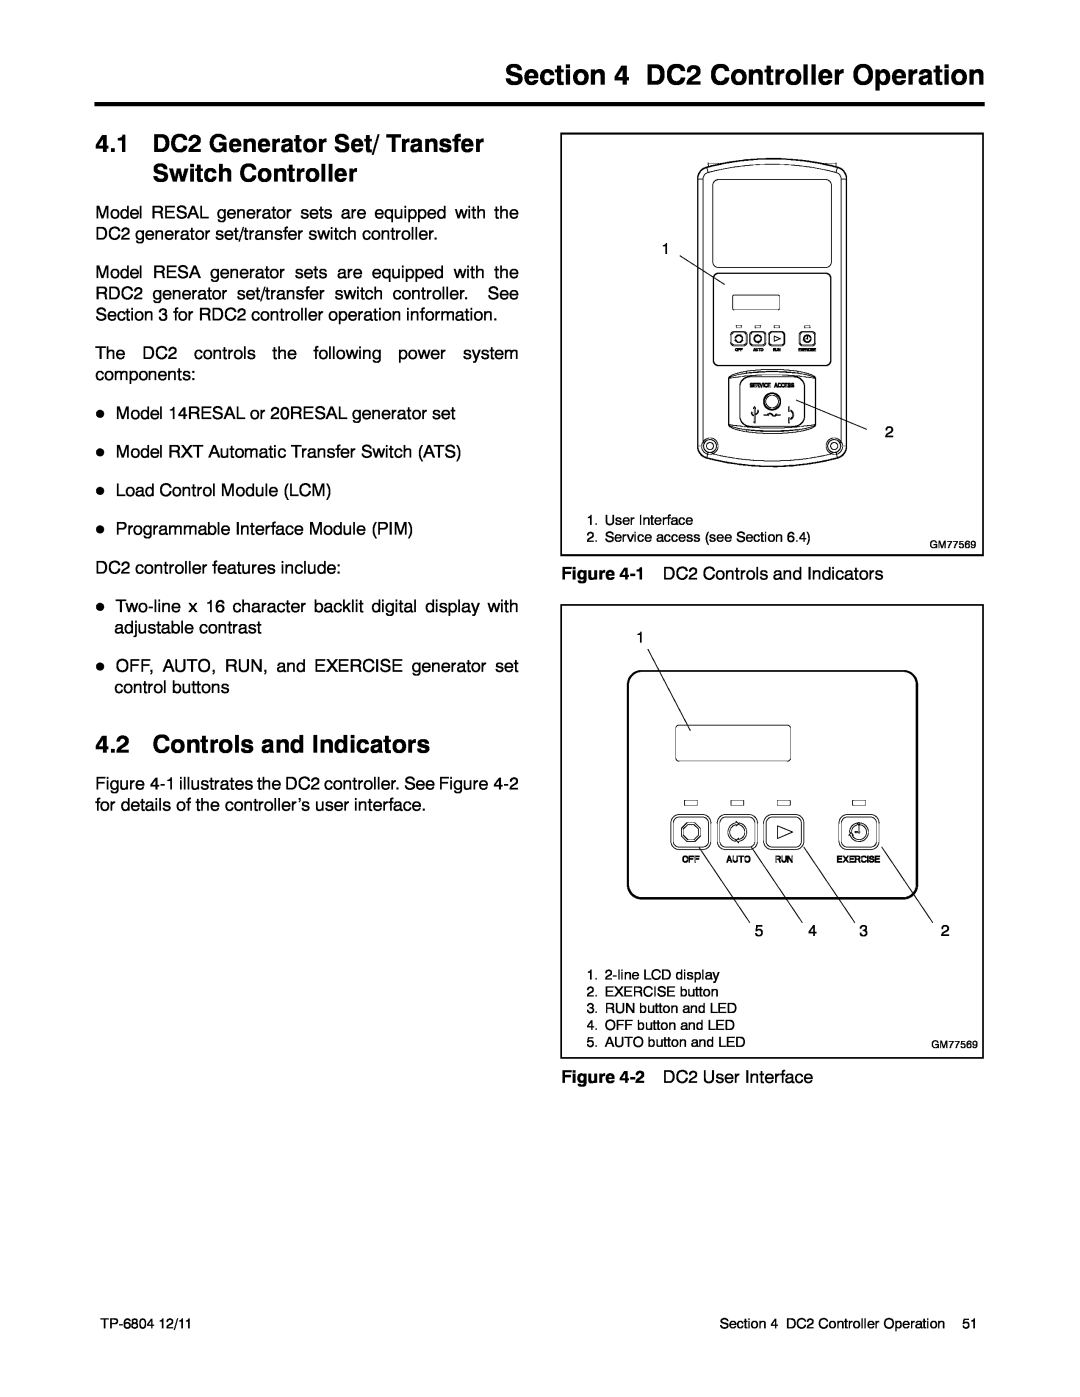 Kohler 14/20RESAL DC2 Controller Operation, 4.1 DC2 Generator Set/ Transfer Switch Controller, Controls and Indicators 